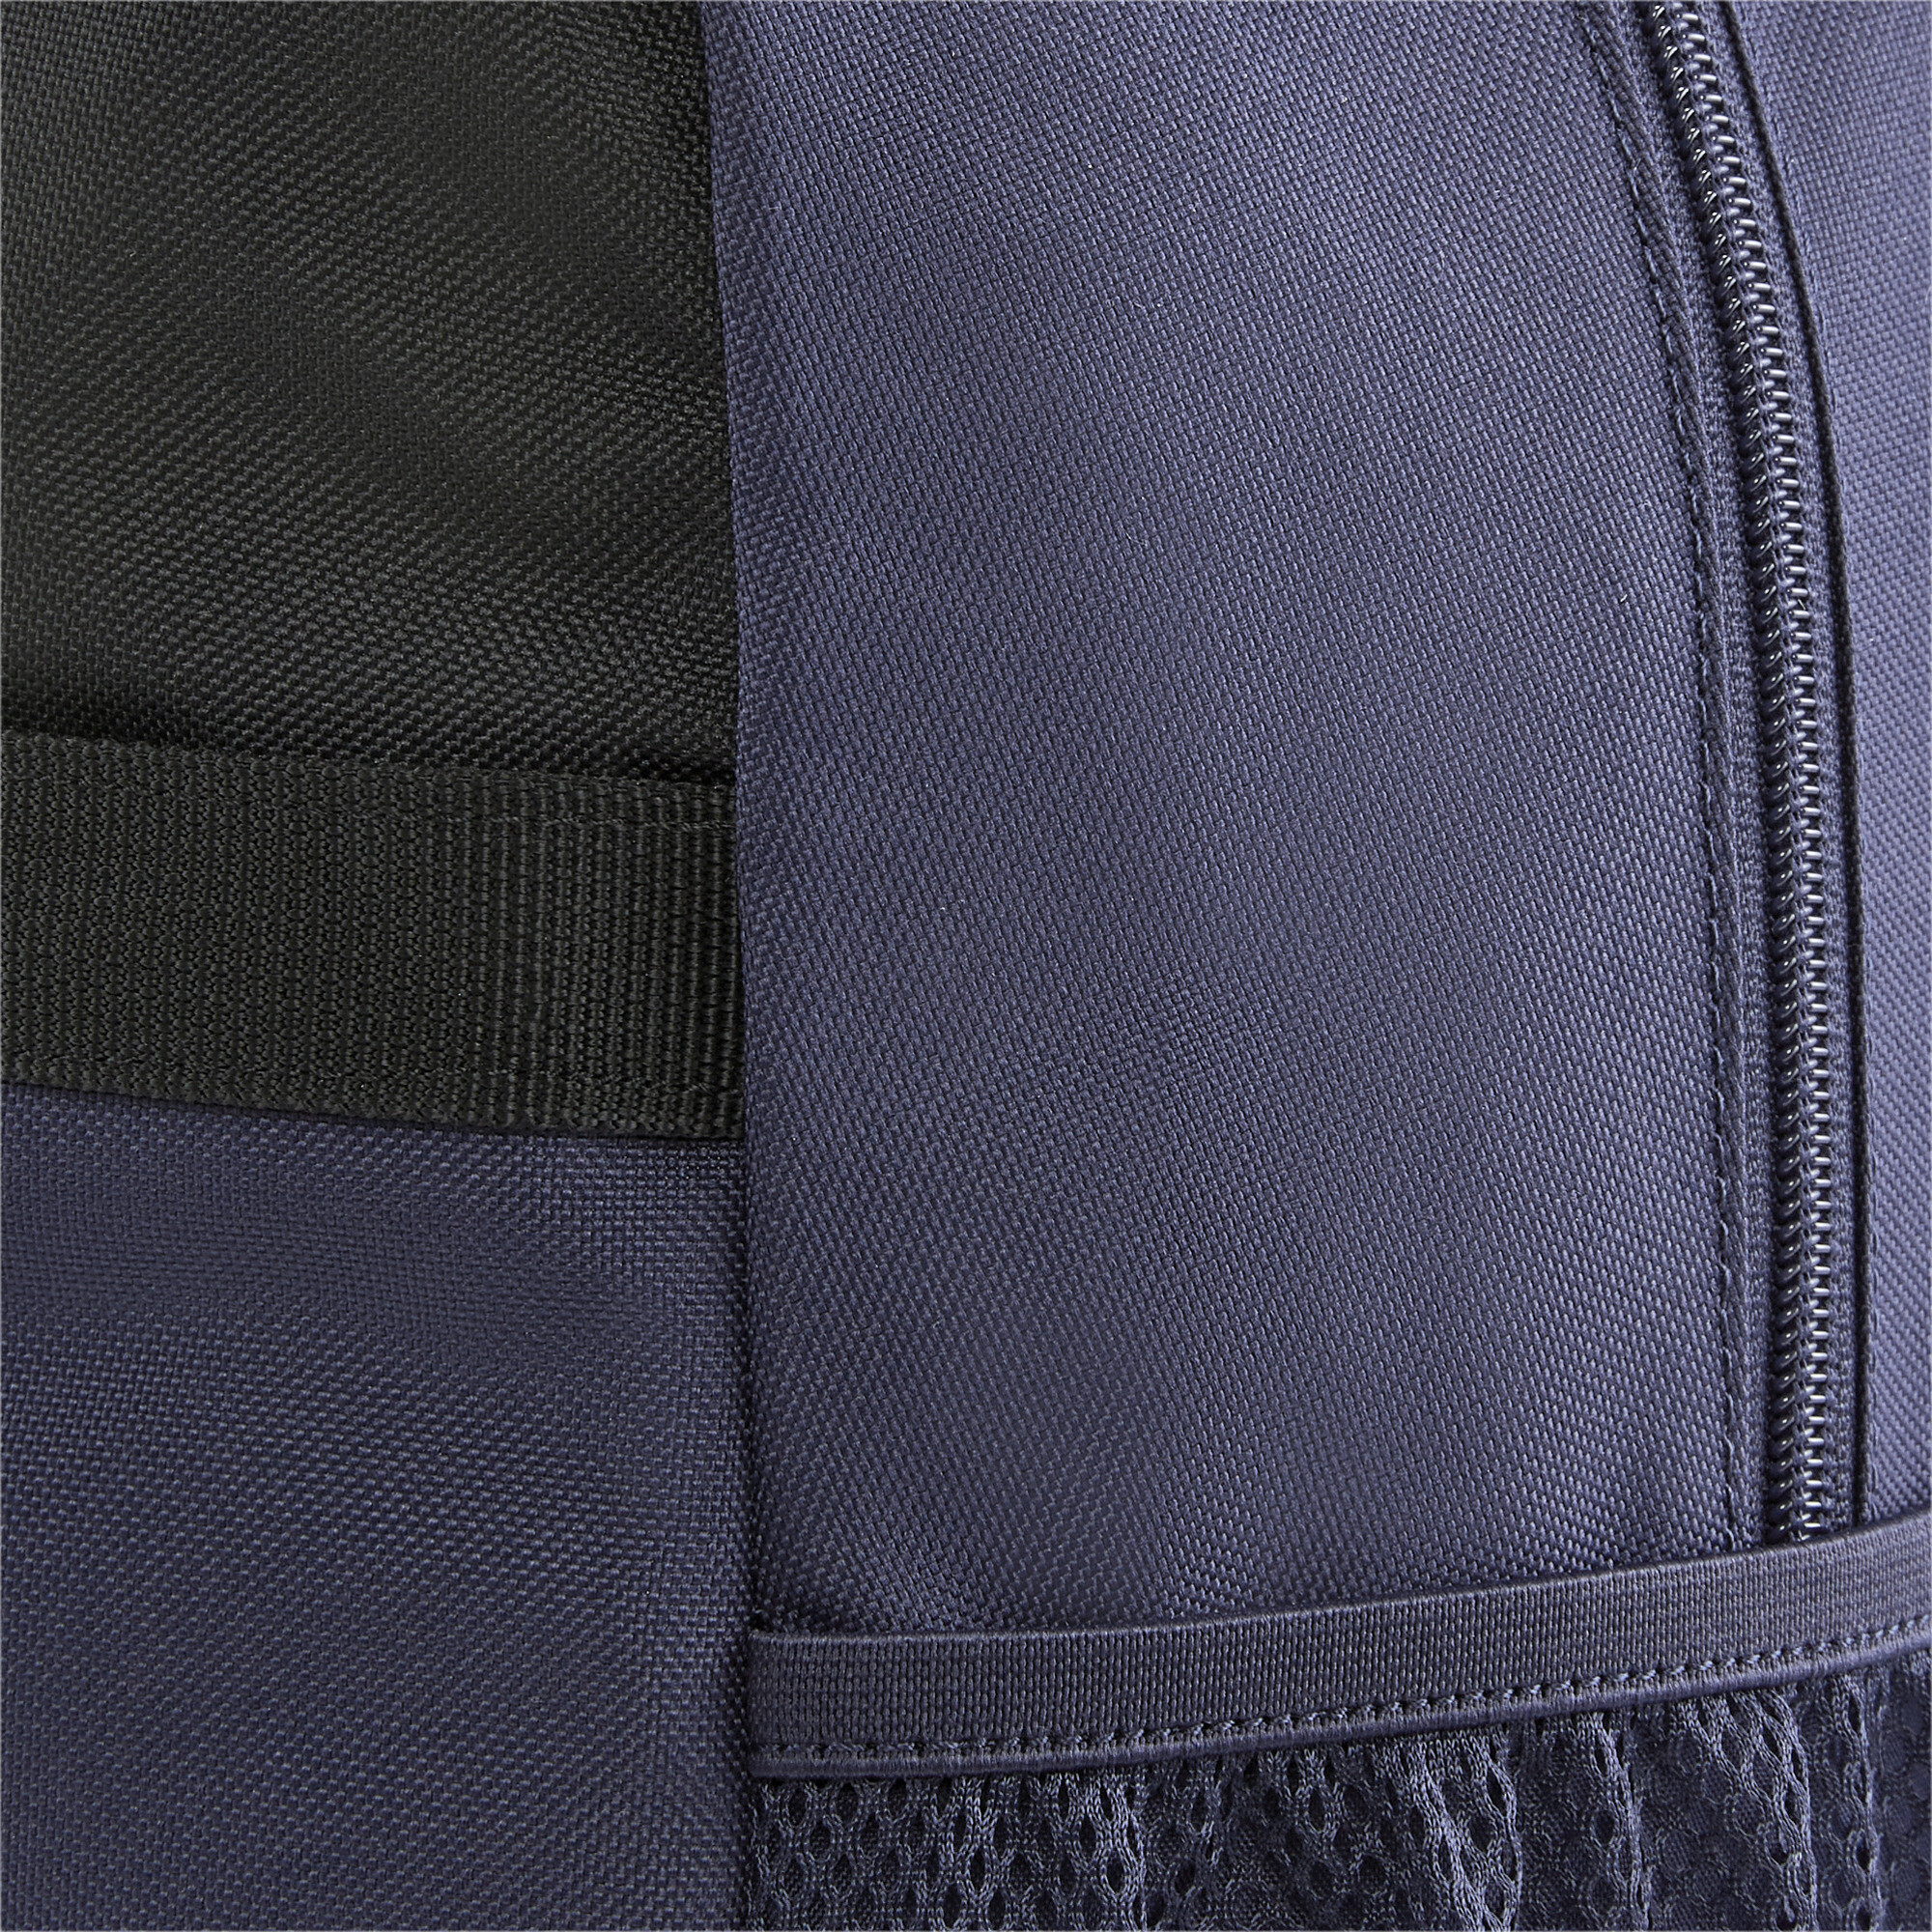 Puma Plus Backpack, Blue, Accessories